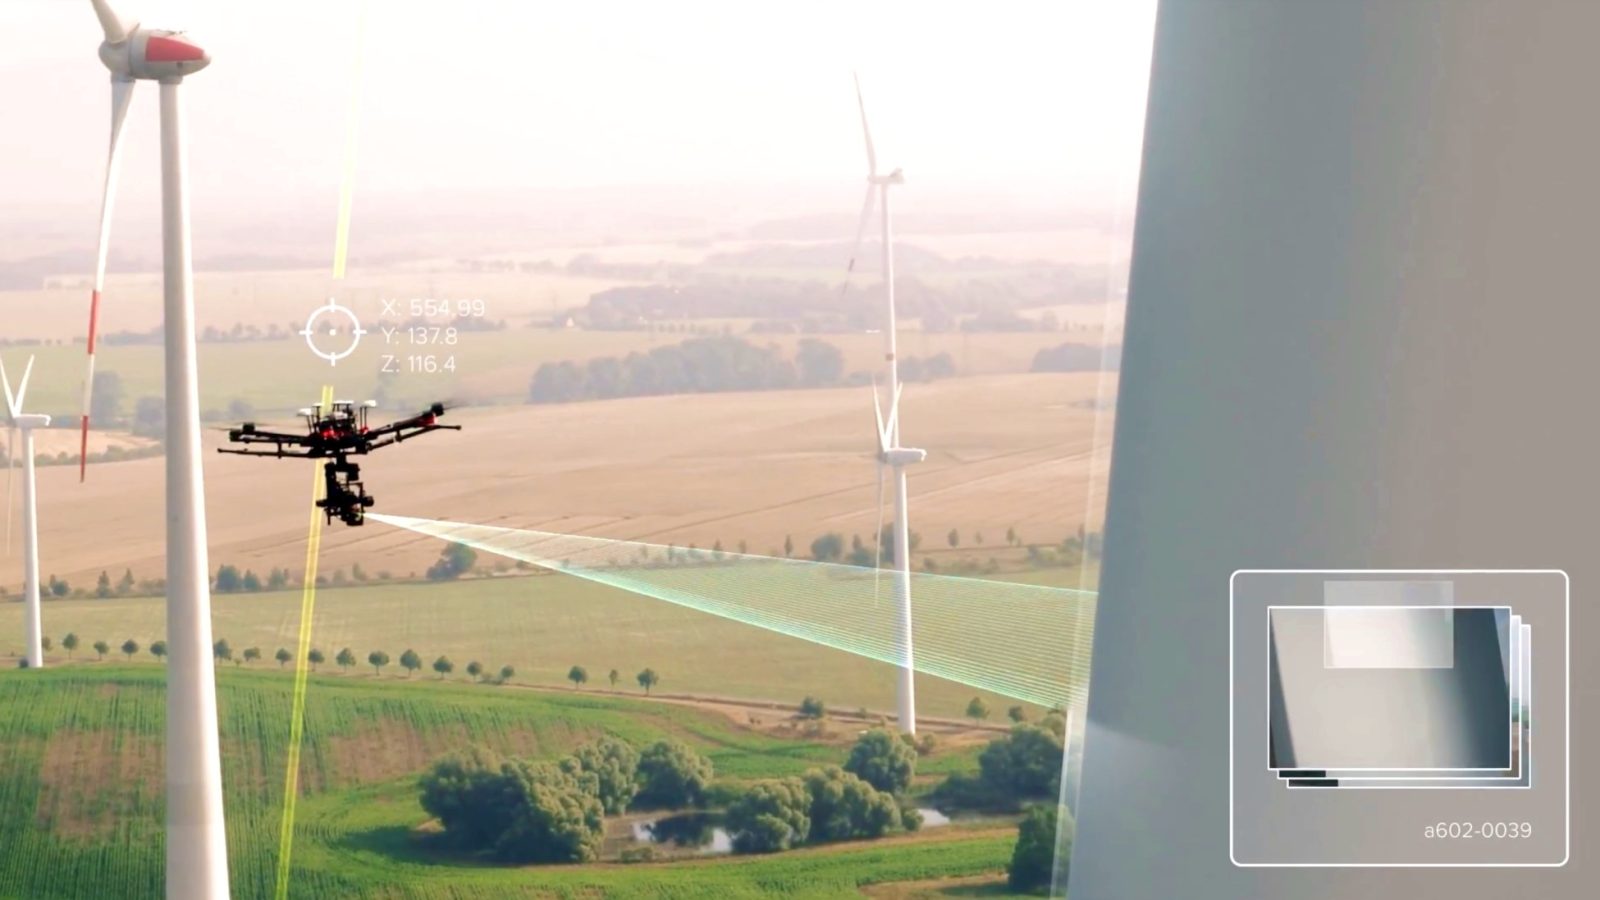 DJI Matrice 210 used for new drone-based wind turbine blade inspection platform